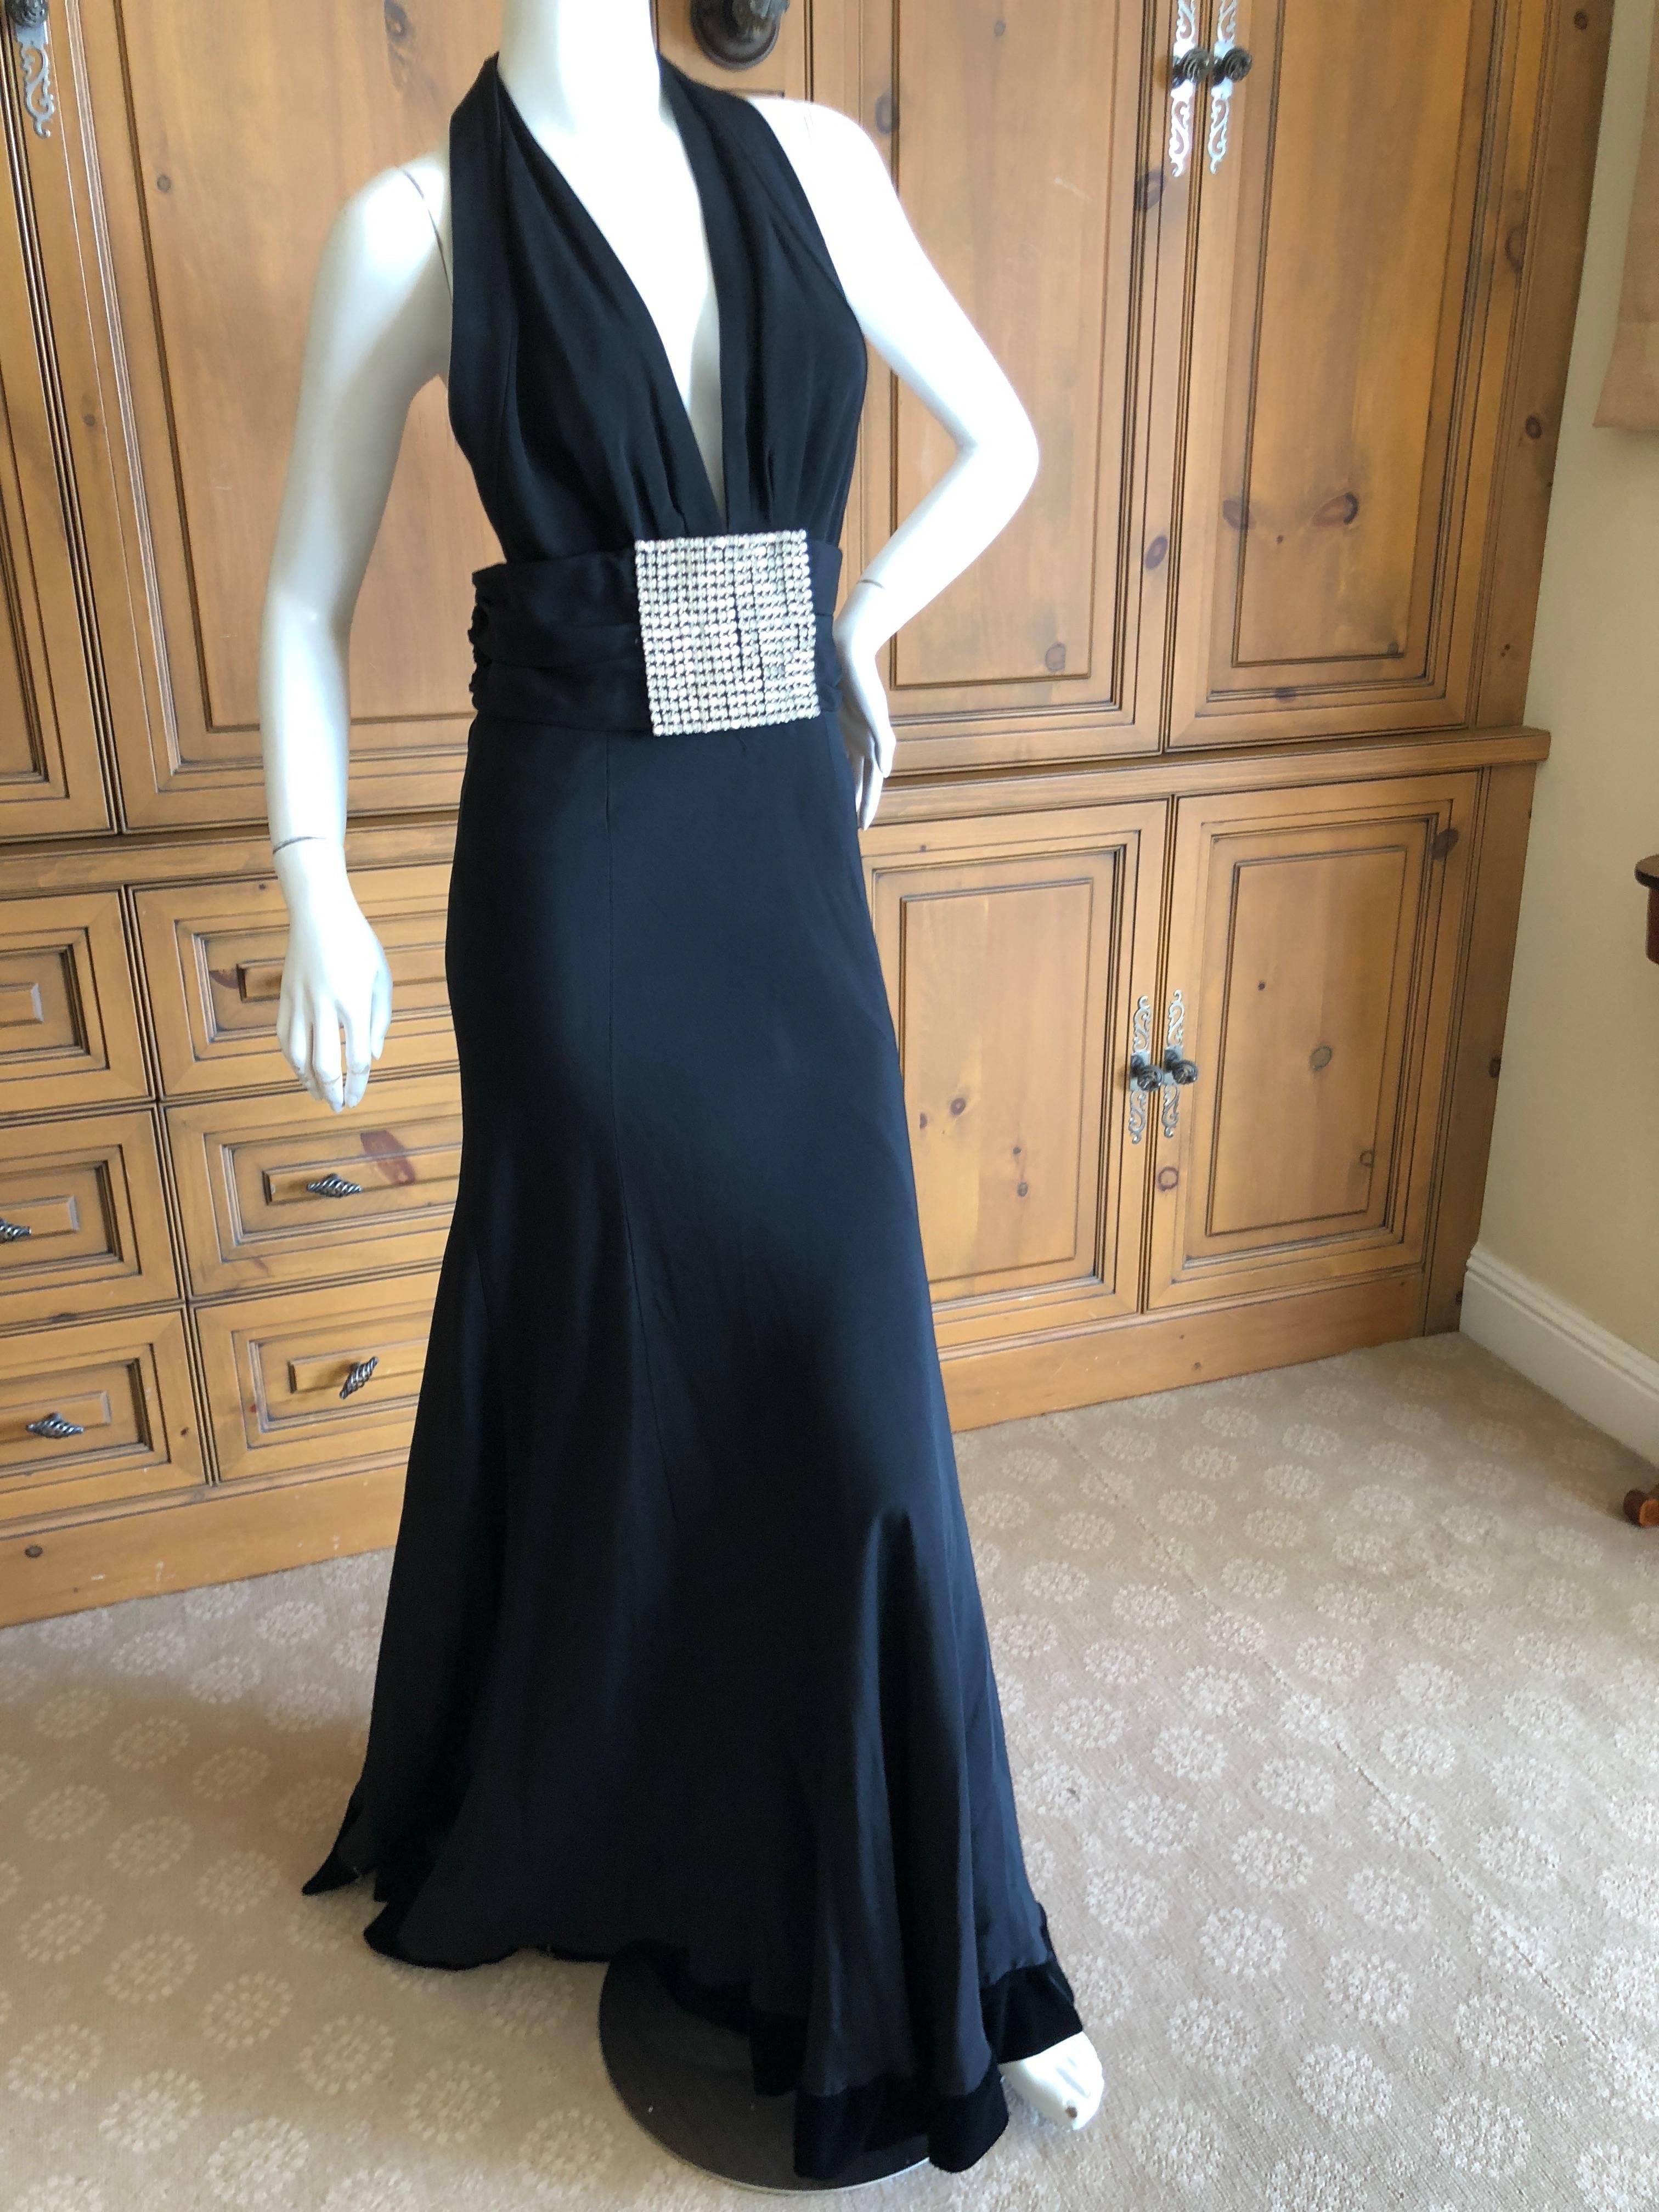 Cardinali Black Low Cut Halter Evening Dress with Huge Rhinestone Crystal Belt For Sale 5